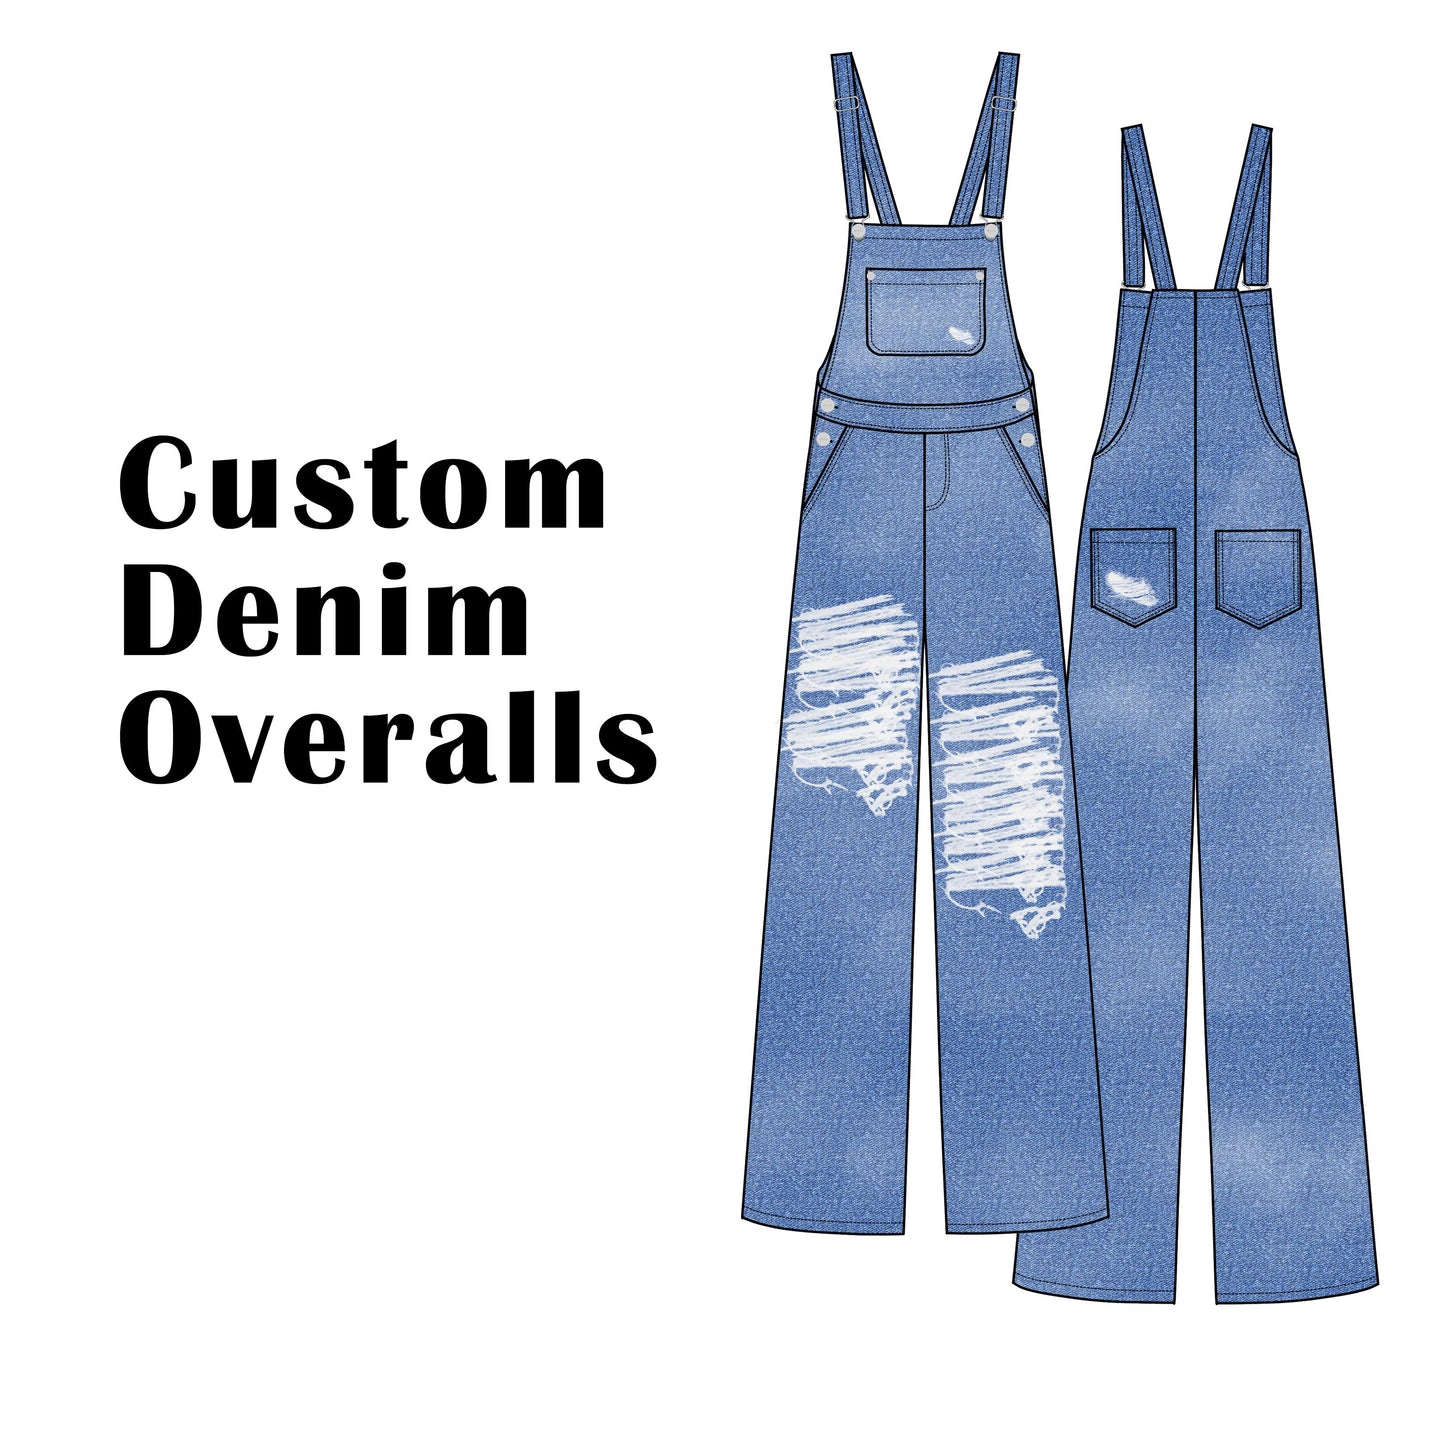 Custom Denim Overalls